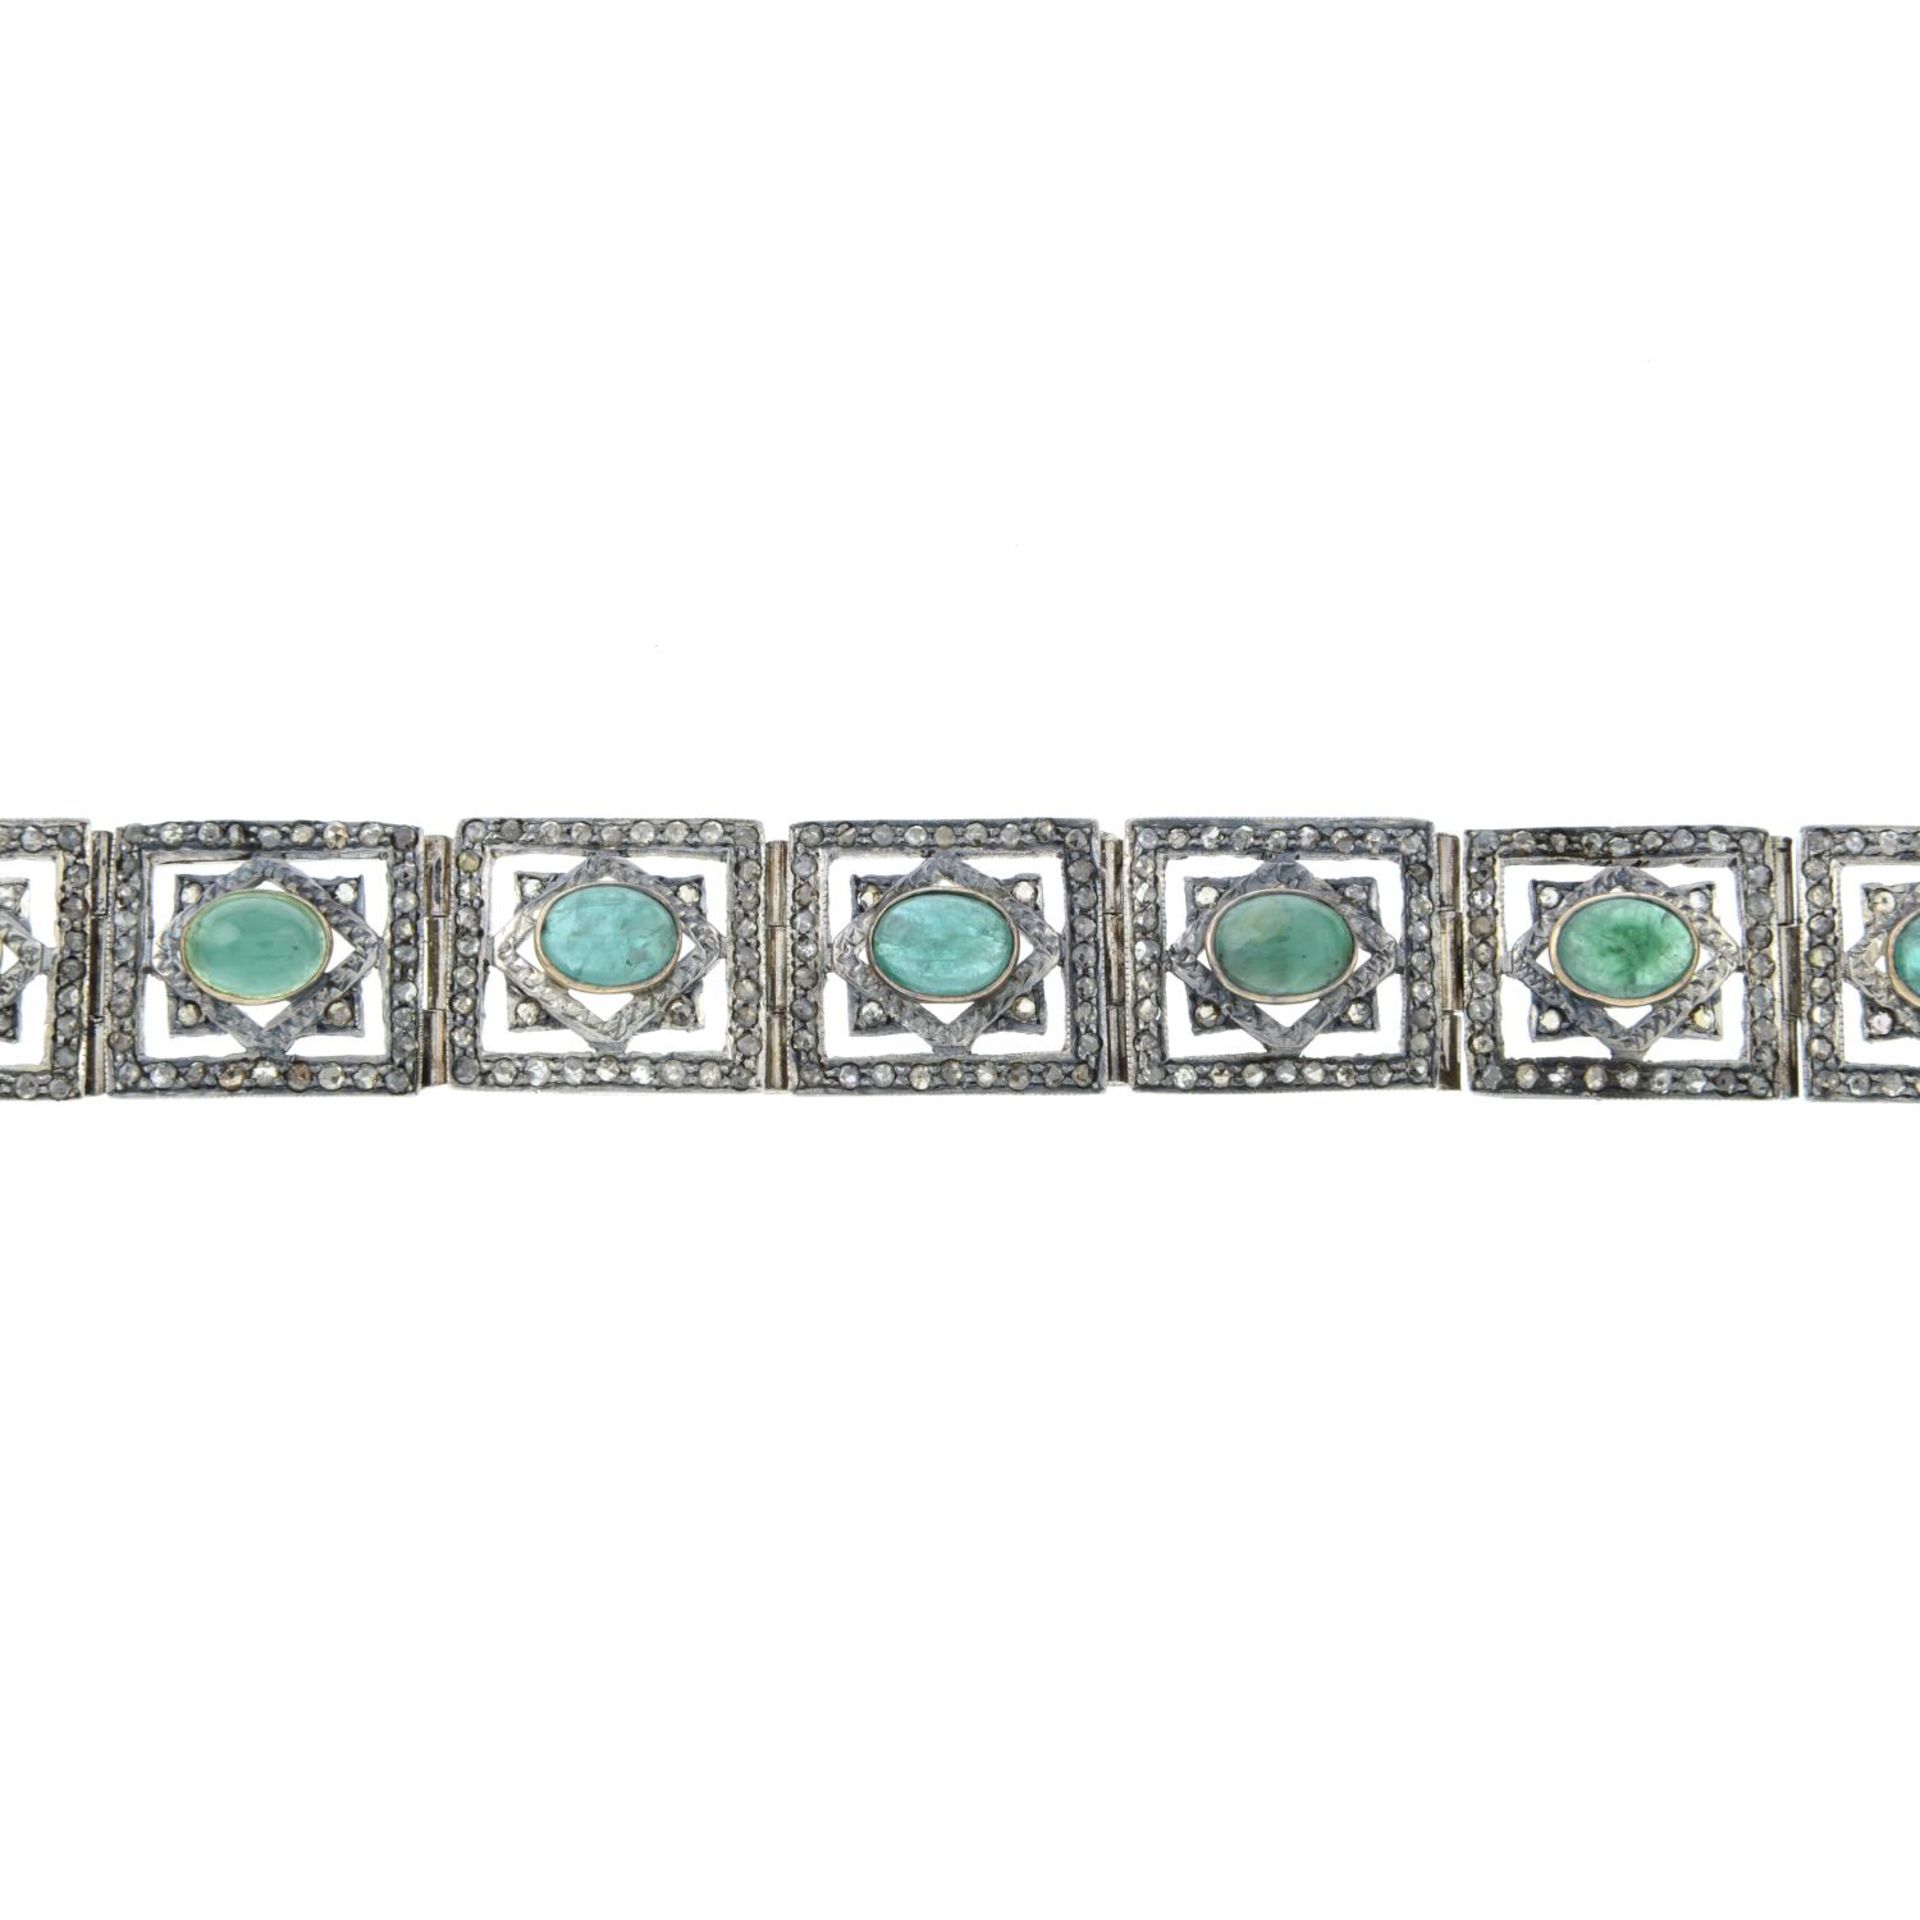 A rose-cut diamond and emerald cabochon bracelet.